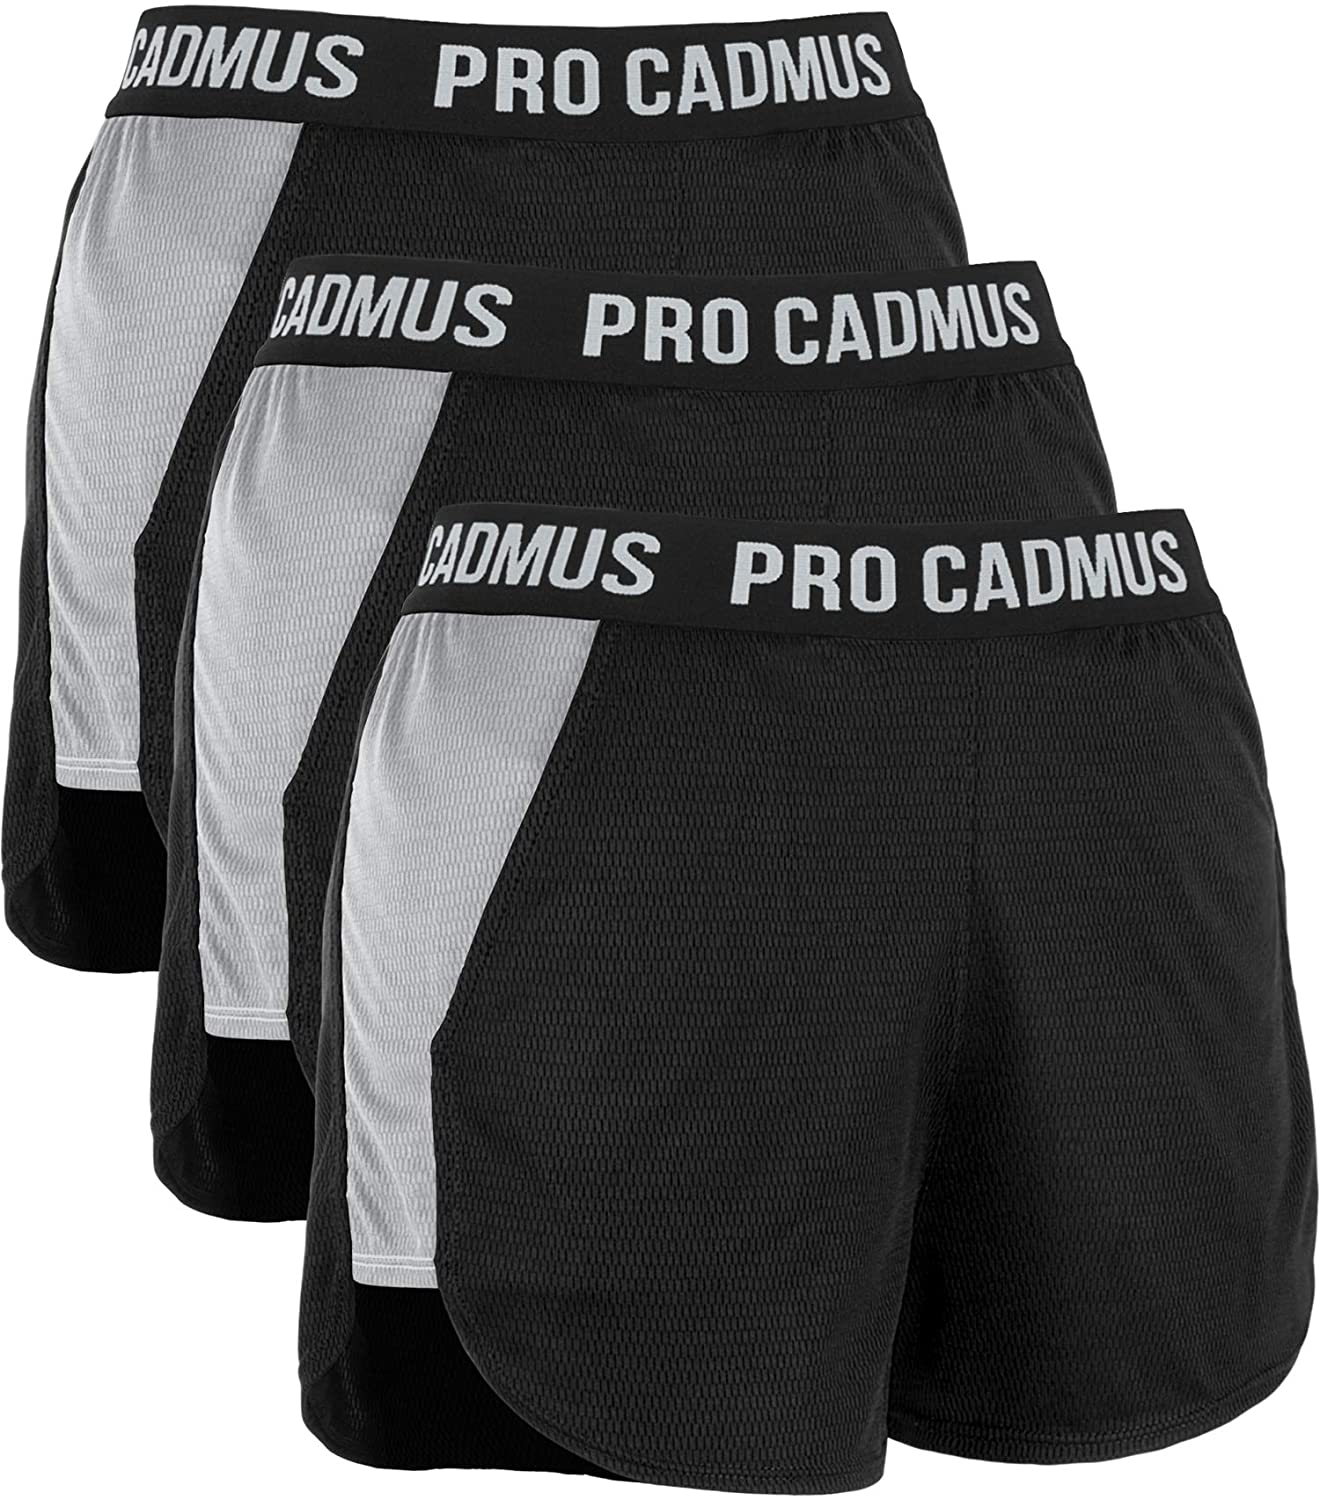 CADMUS Women's Mesh Leisure Running Shorts w Pockets 